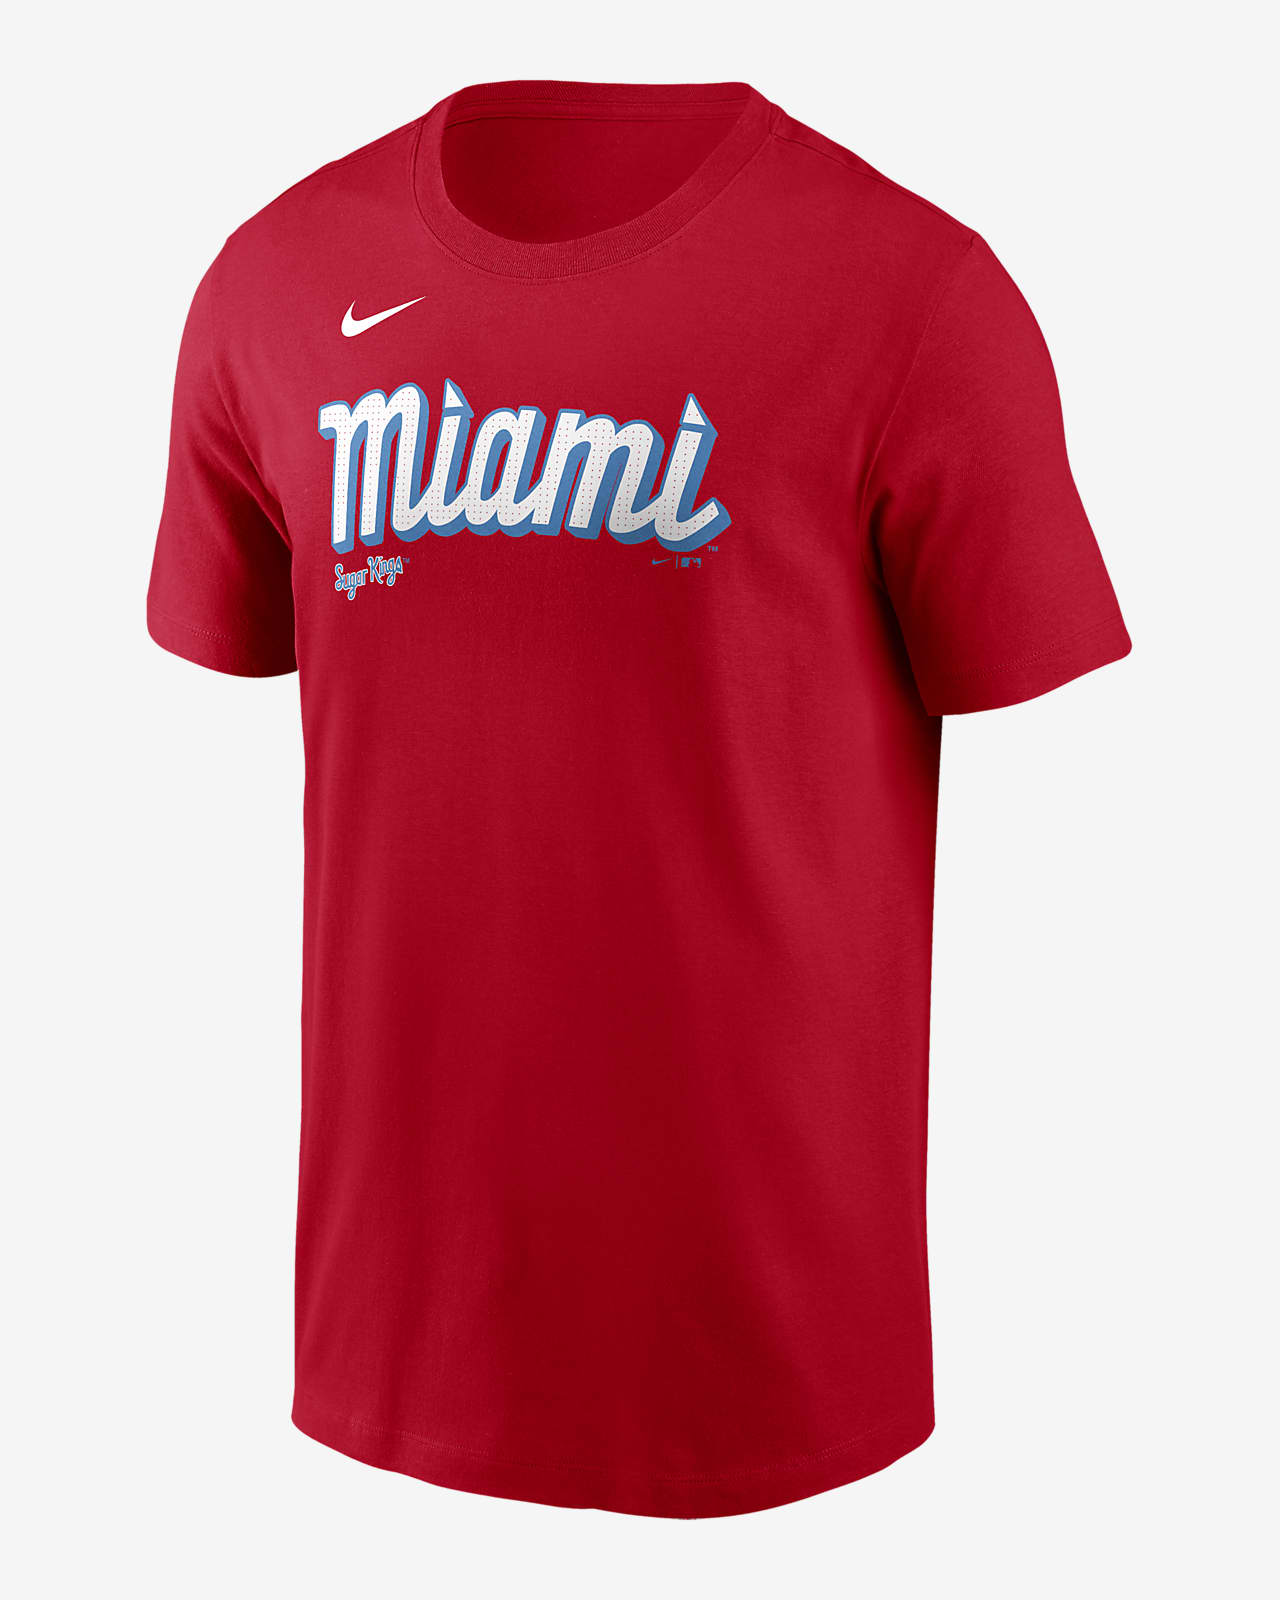 Jazz Chisholm Jr. Miami Marlins City Connect Fuse Men's Nike MLB T-Shirt